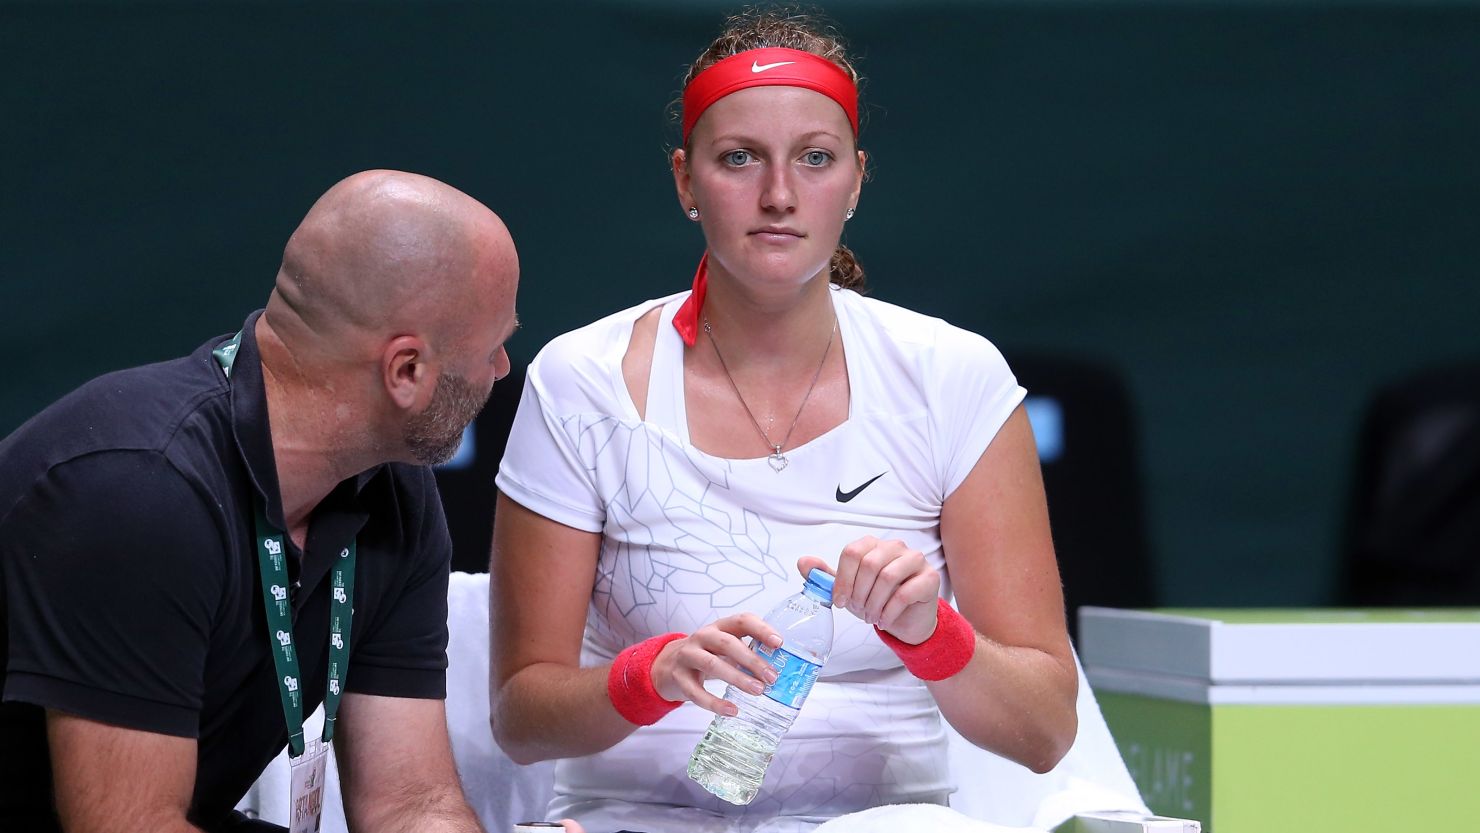 Defending champion Petra Kvitova was out of sorts in her match against Agnieszka Radwanska, making 41 unforced errors. 